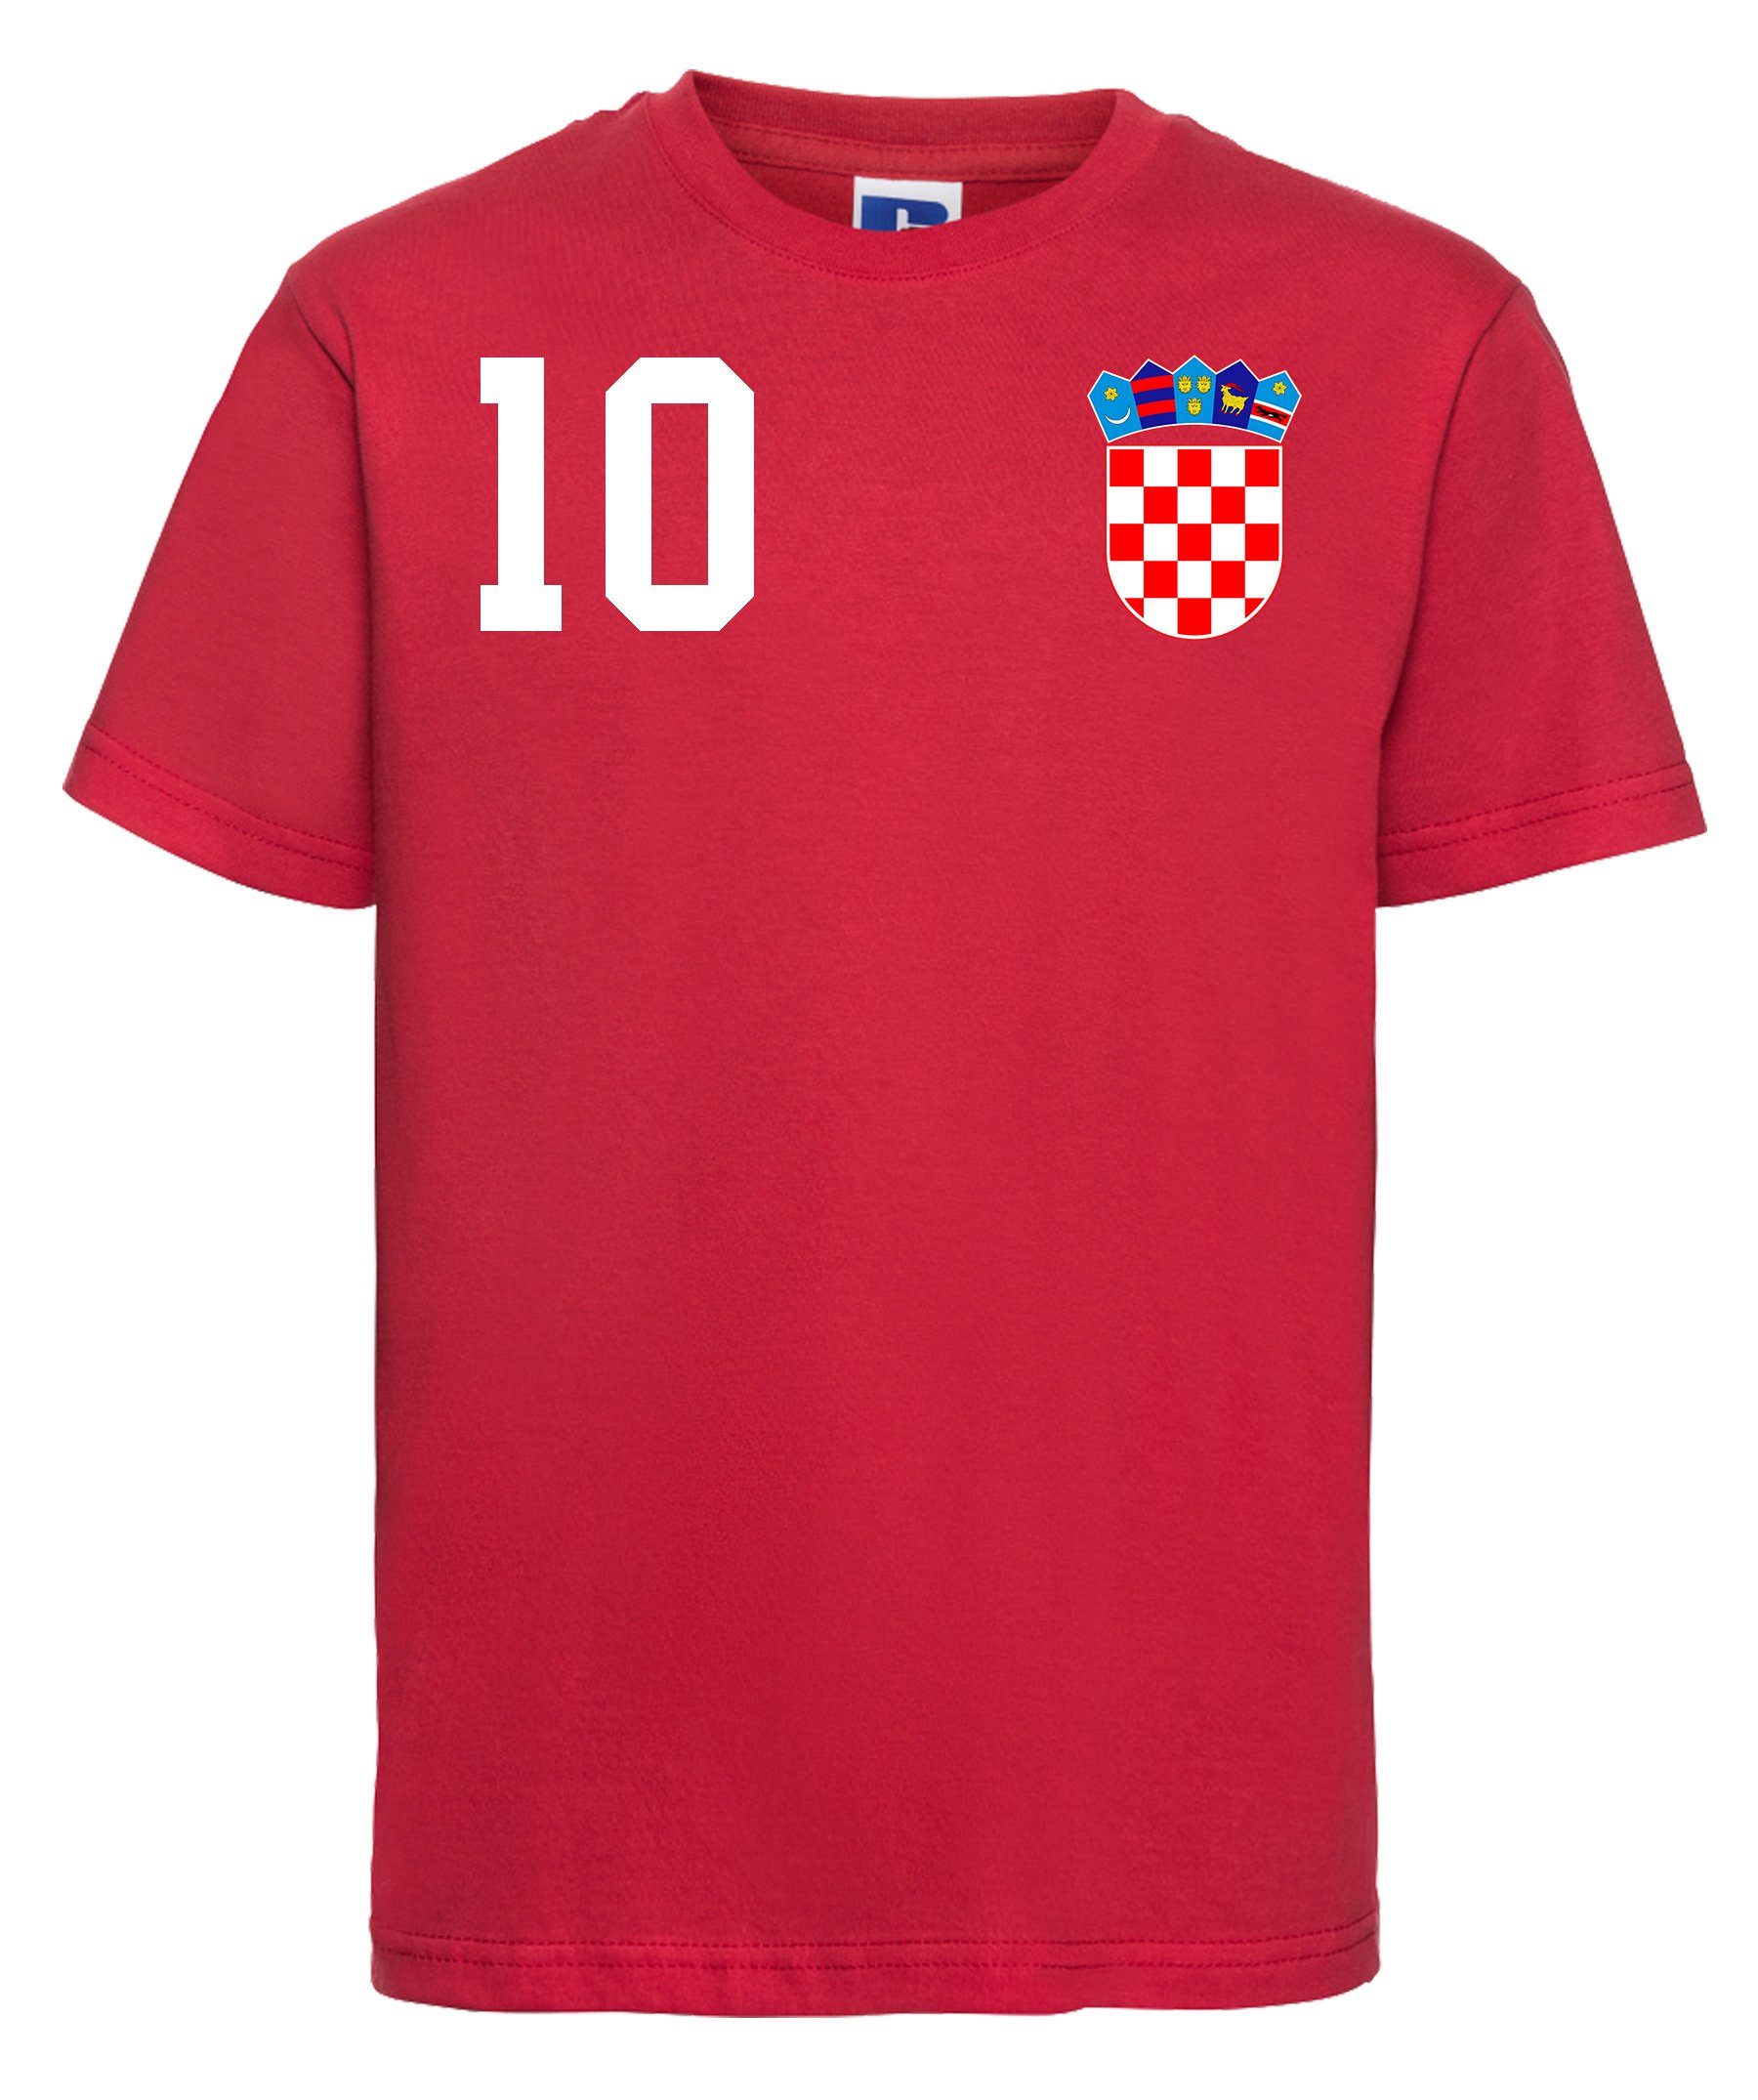 Verkaufsförderungsaktion Youth Designz trendigem Rot Kinder Kroatien Look im Trikot Fußball T-Shirt T-Shirt mit Motiv